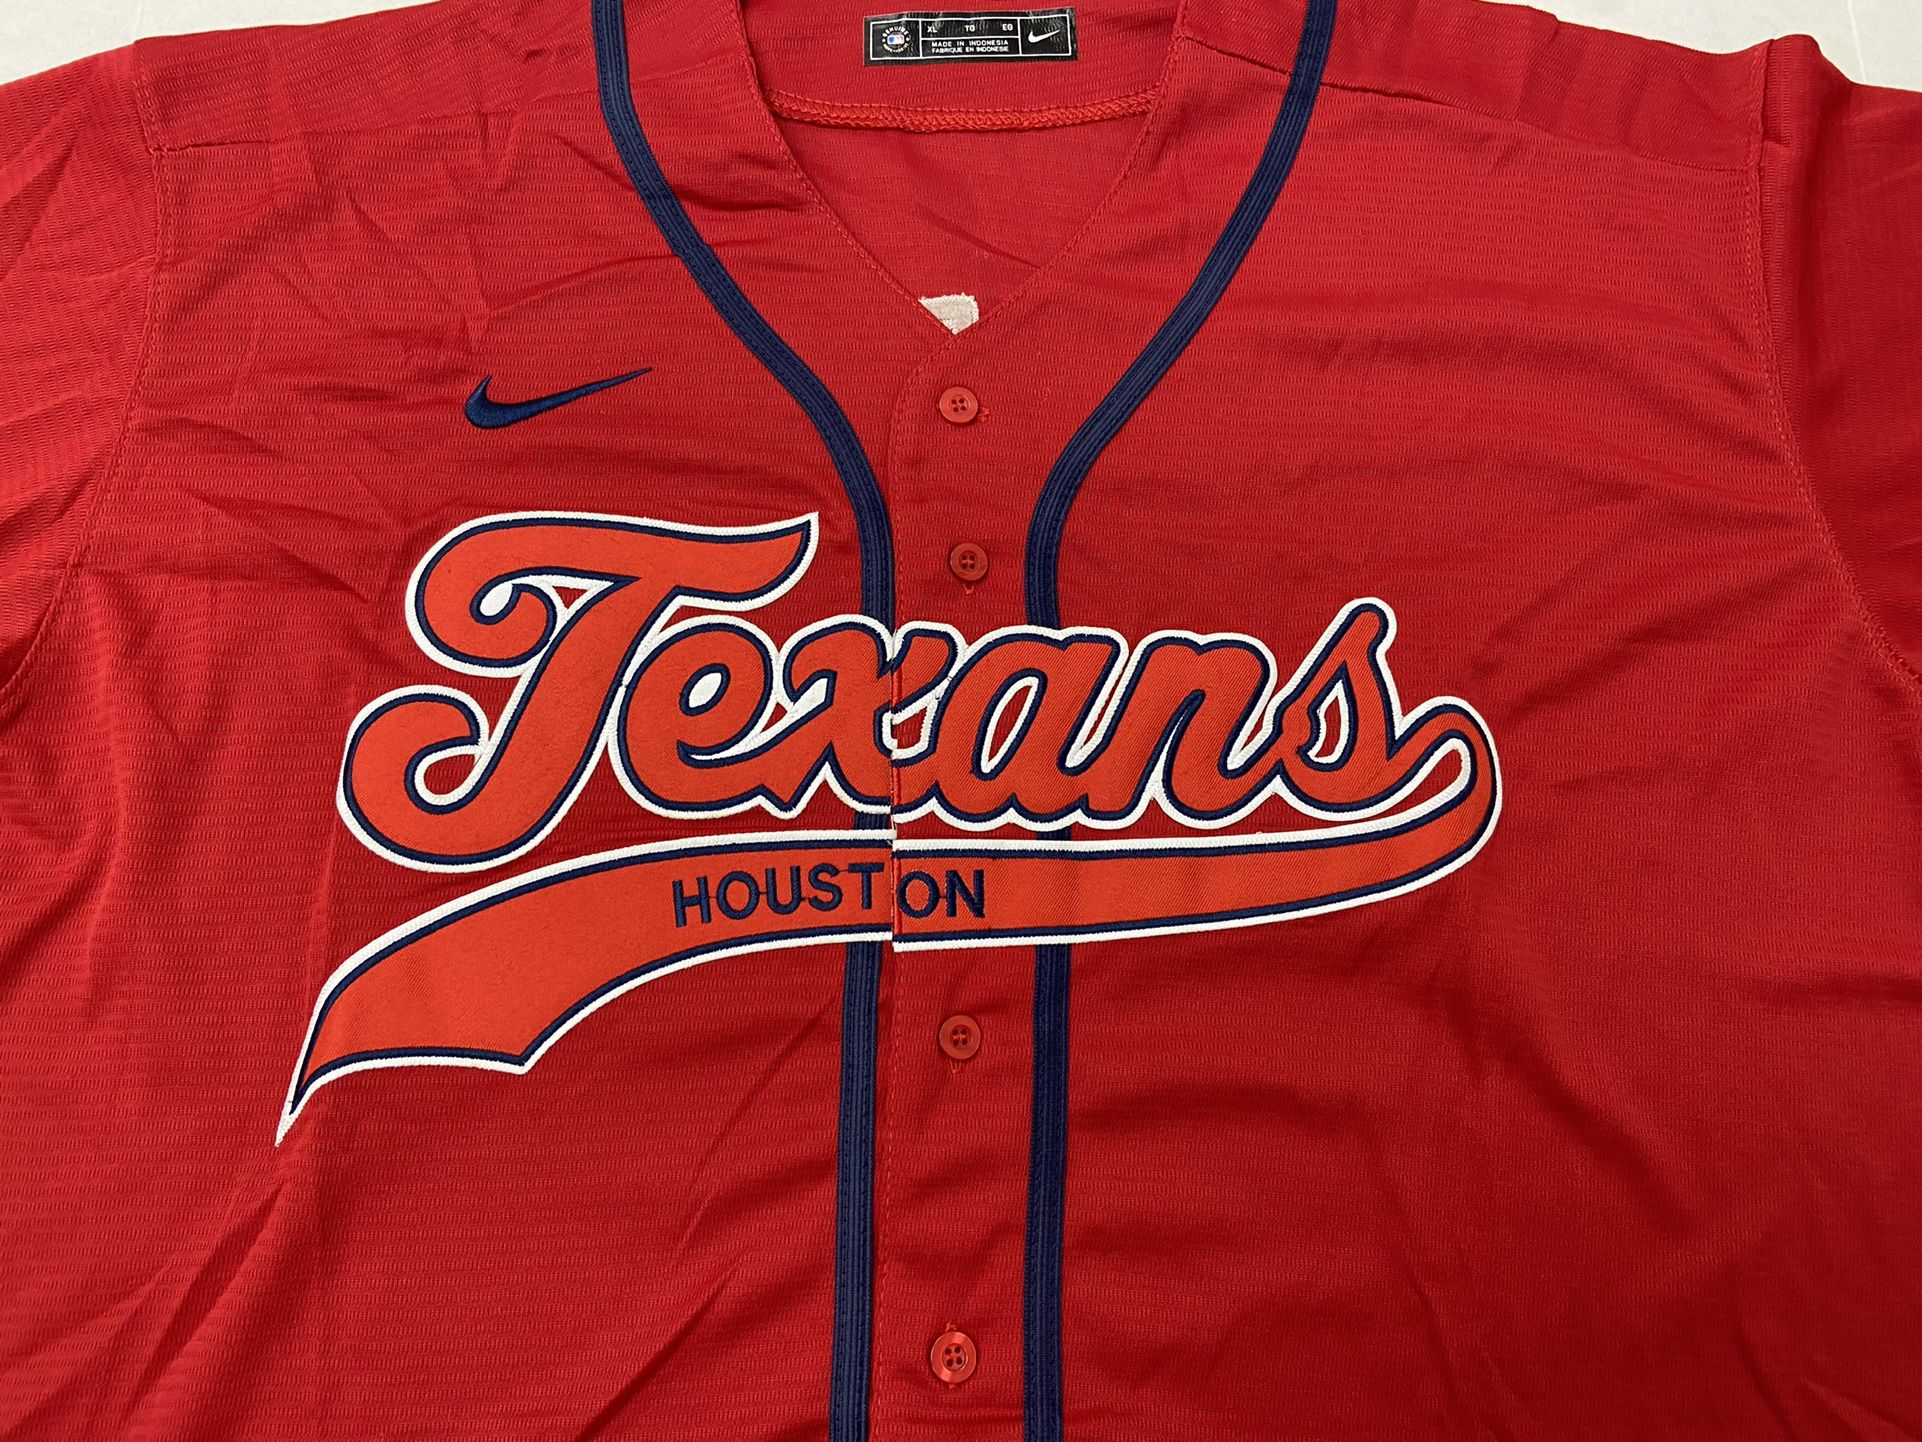 Baseball Jerseys for sale in Houston, Texas